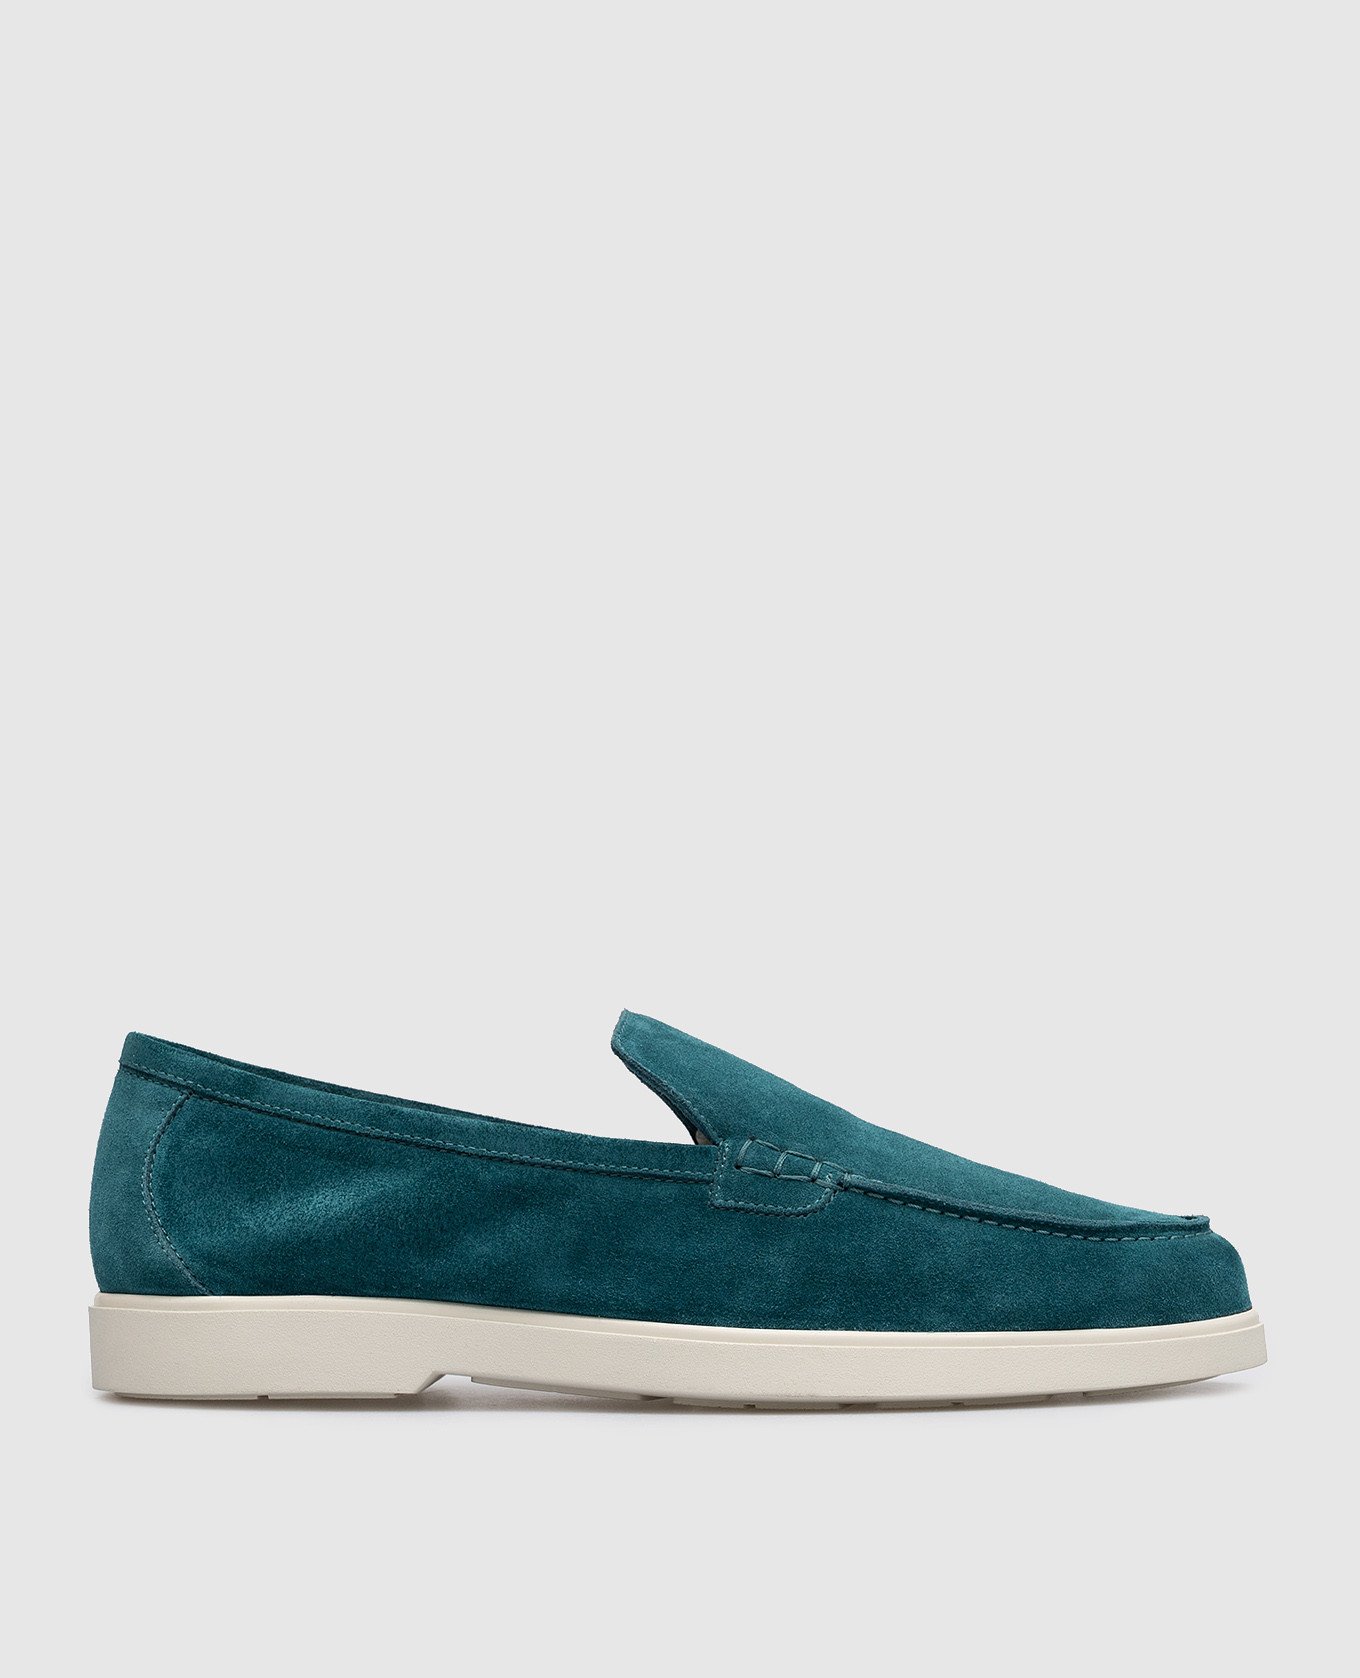 Cezanne green suede slippers